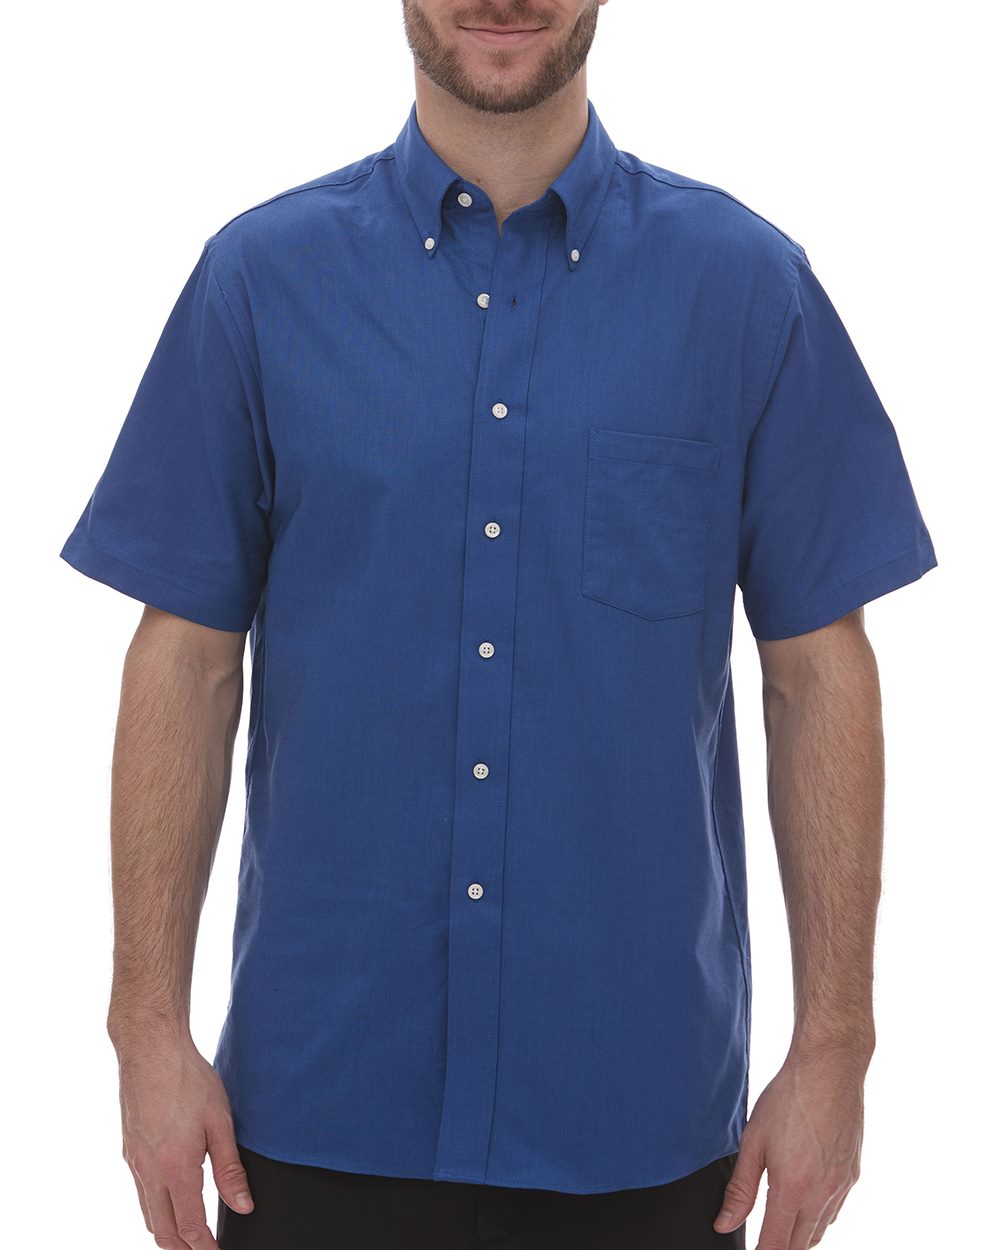 Van Heusen 18CV042 - Oxford Short Sleeve Shirt